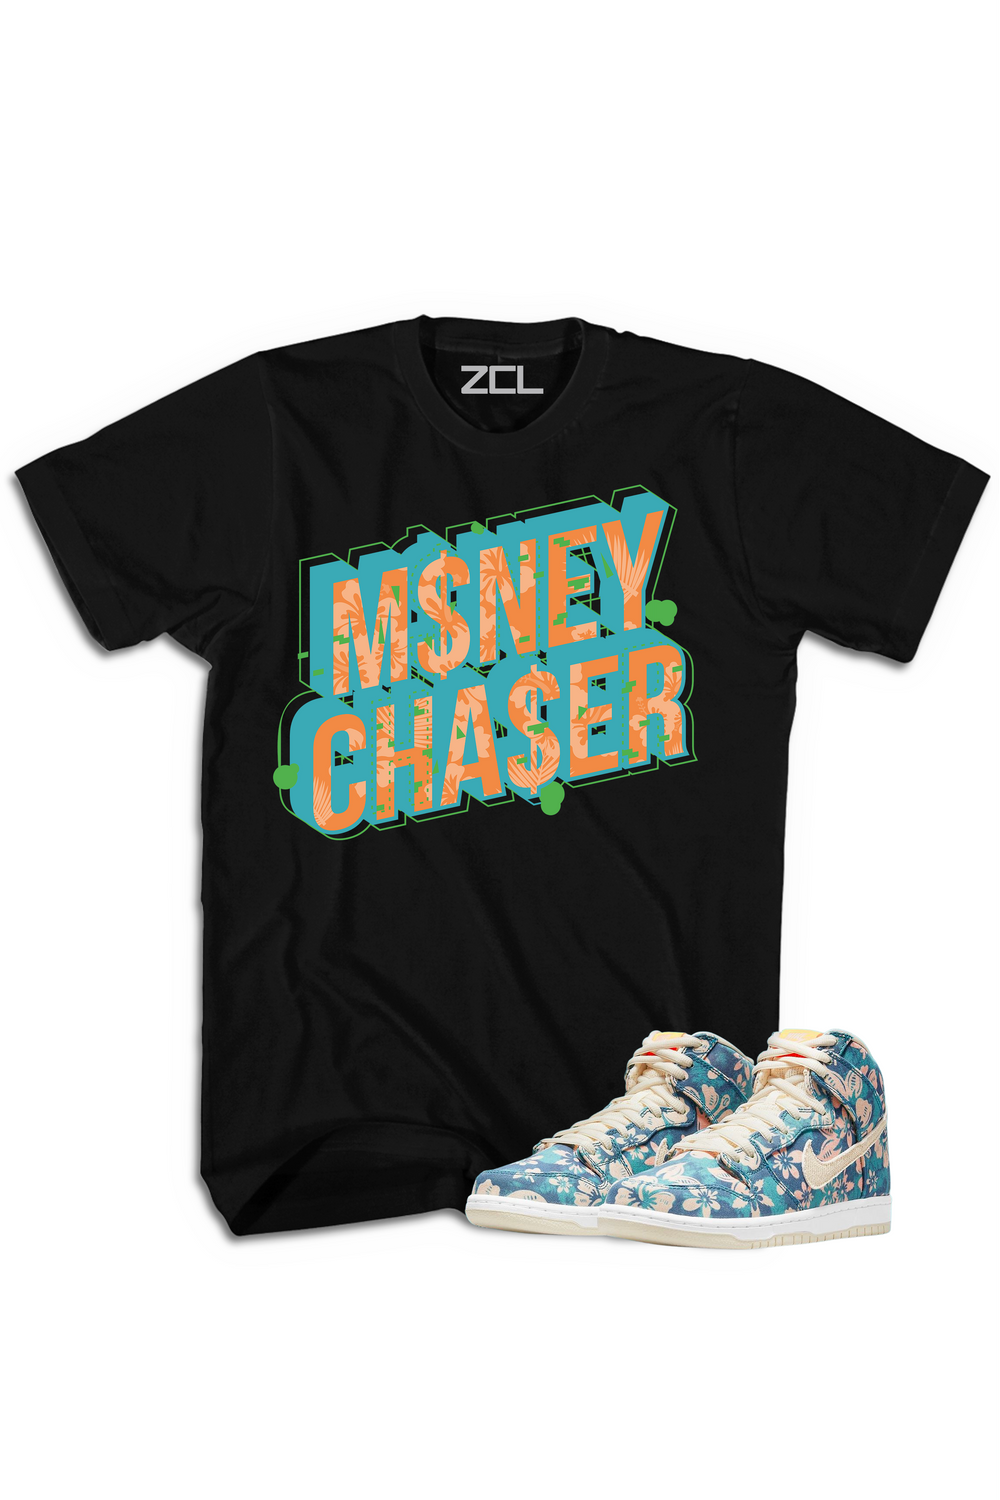 Nike SB Dunk High "Money Chaser" Tee Hawaii - Zamage